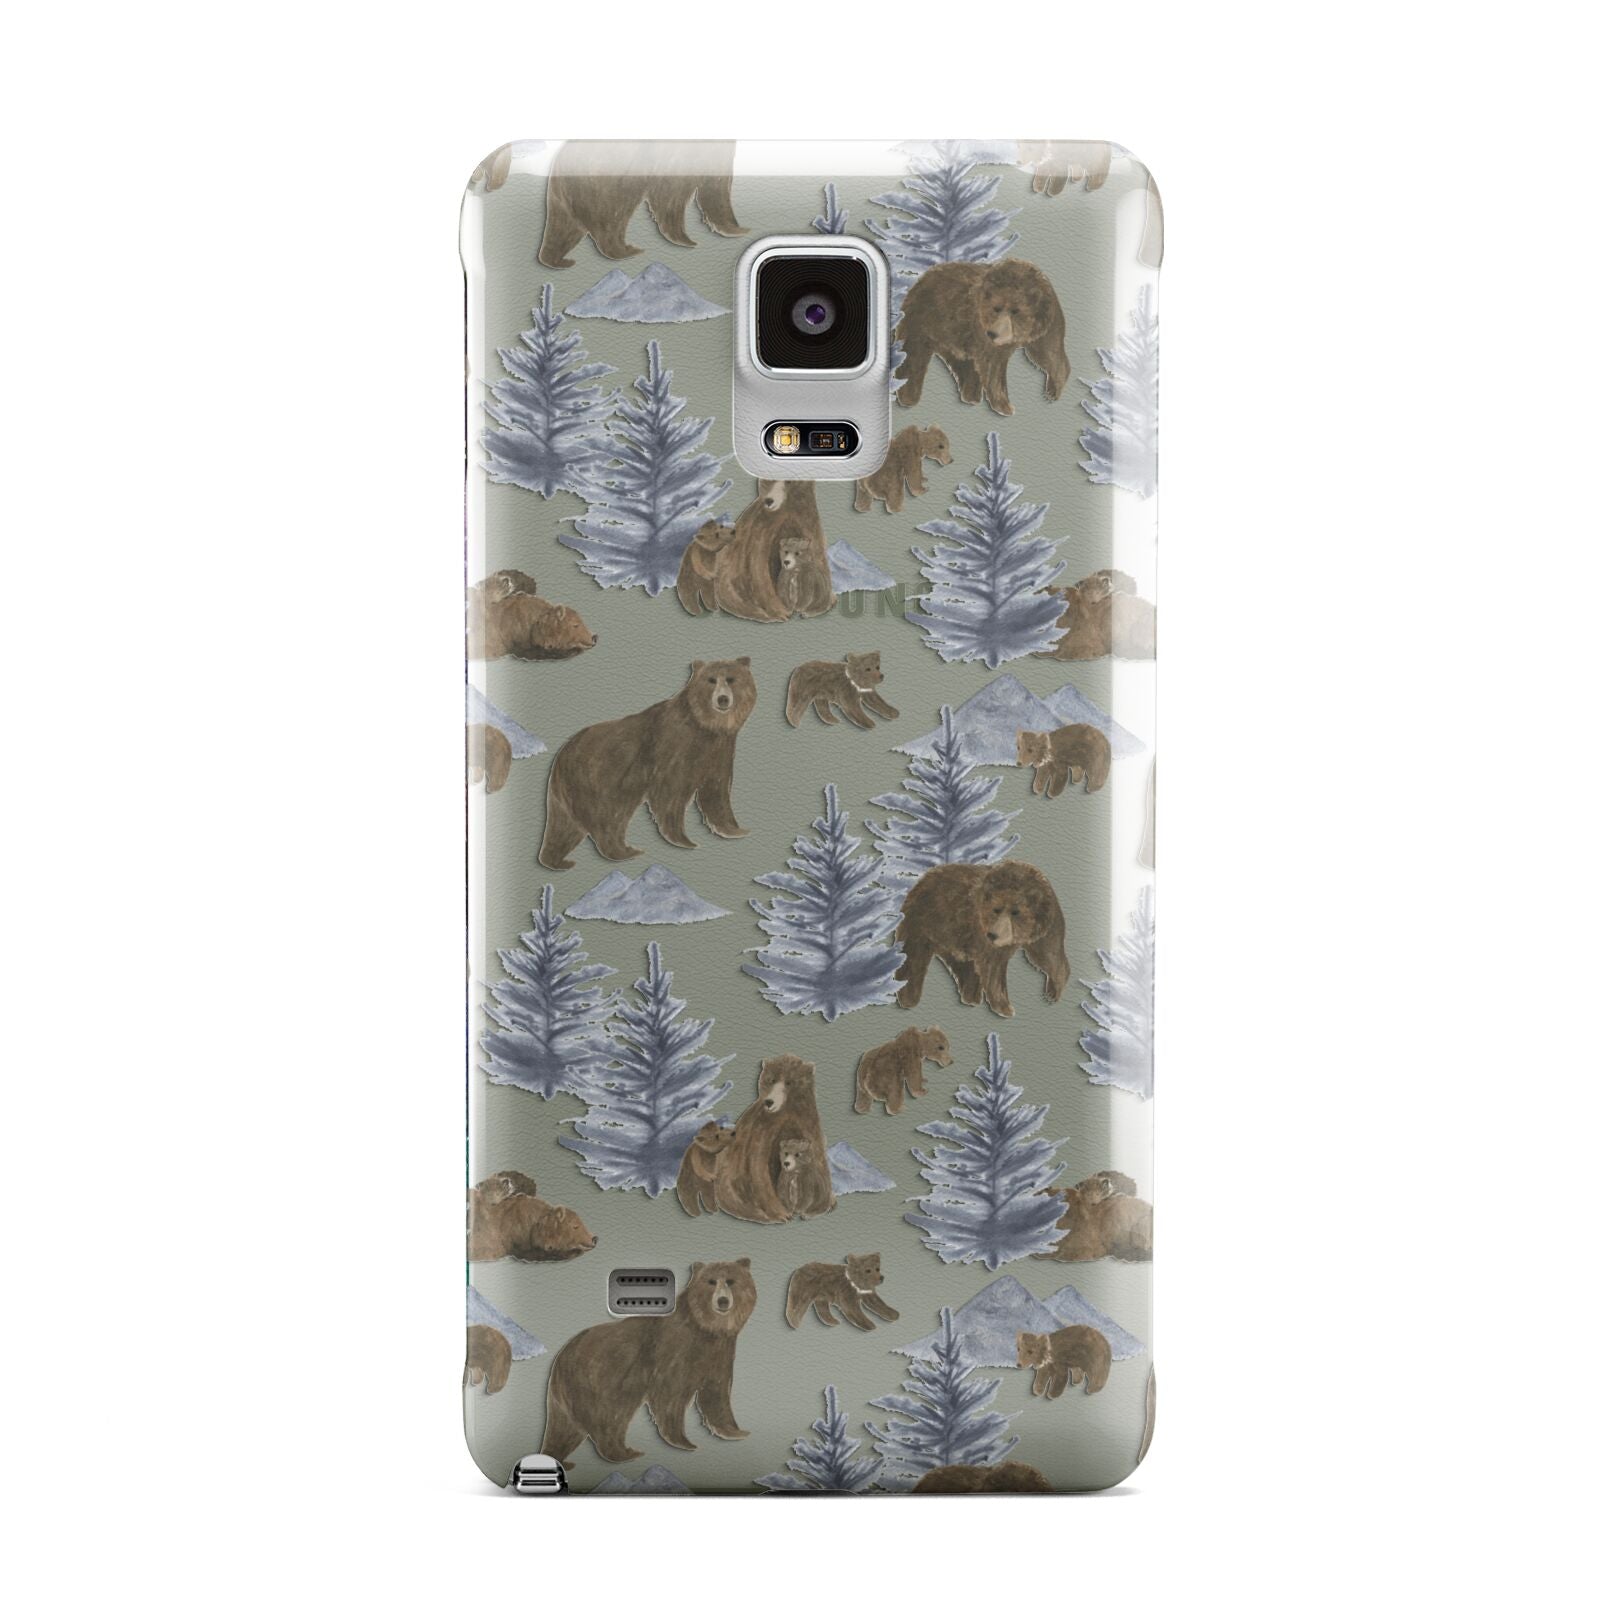 Brown Bear Samsung Galaxy Note 4 Case